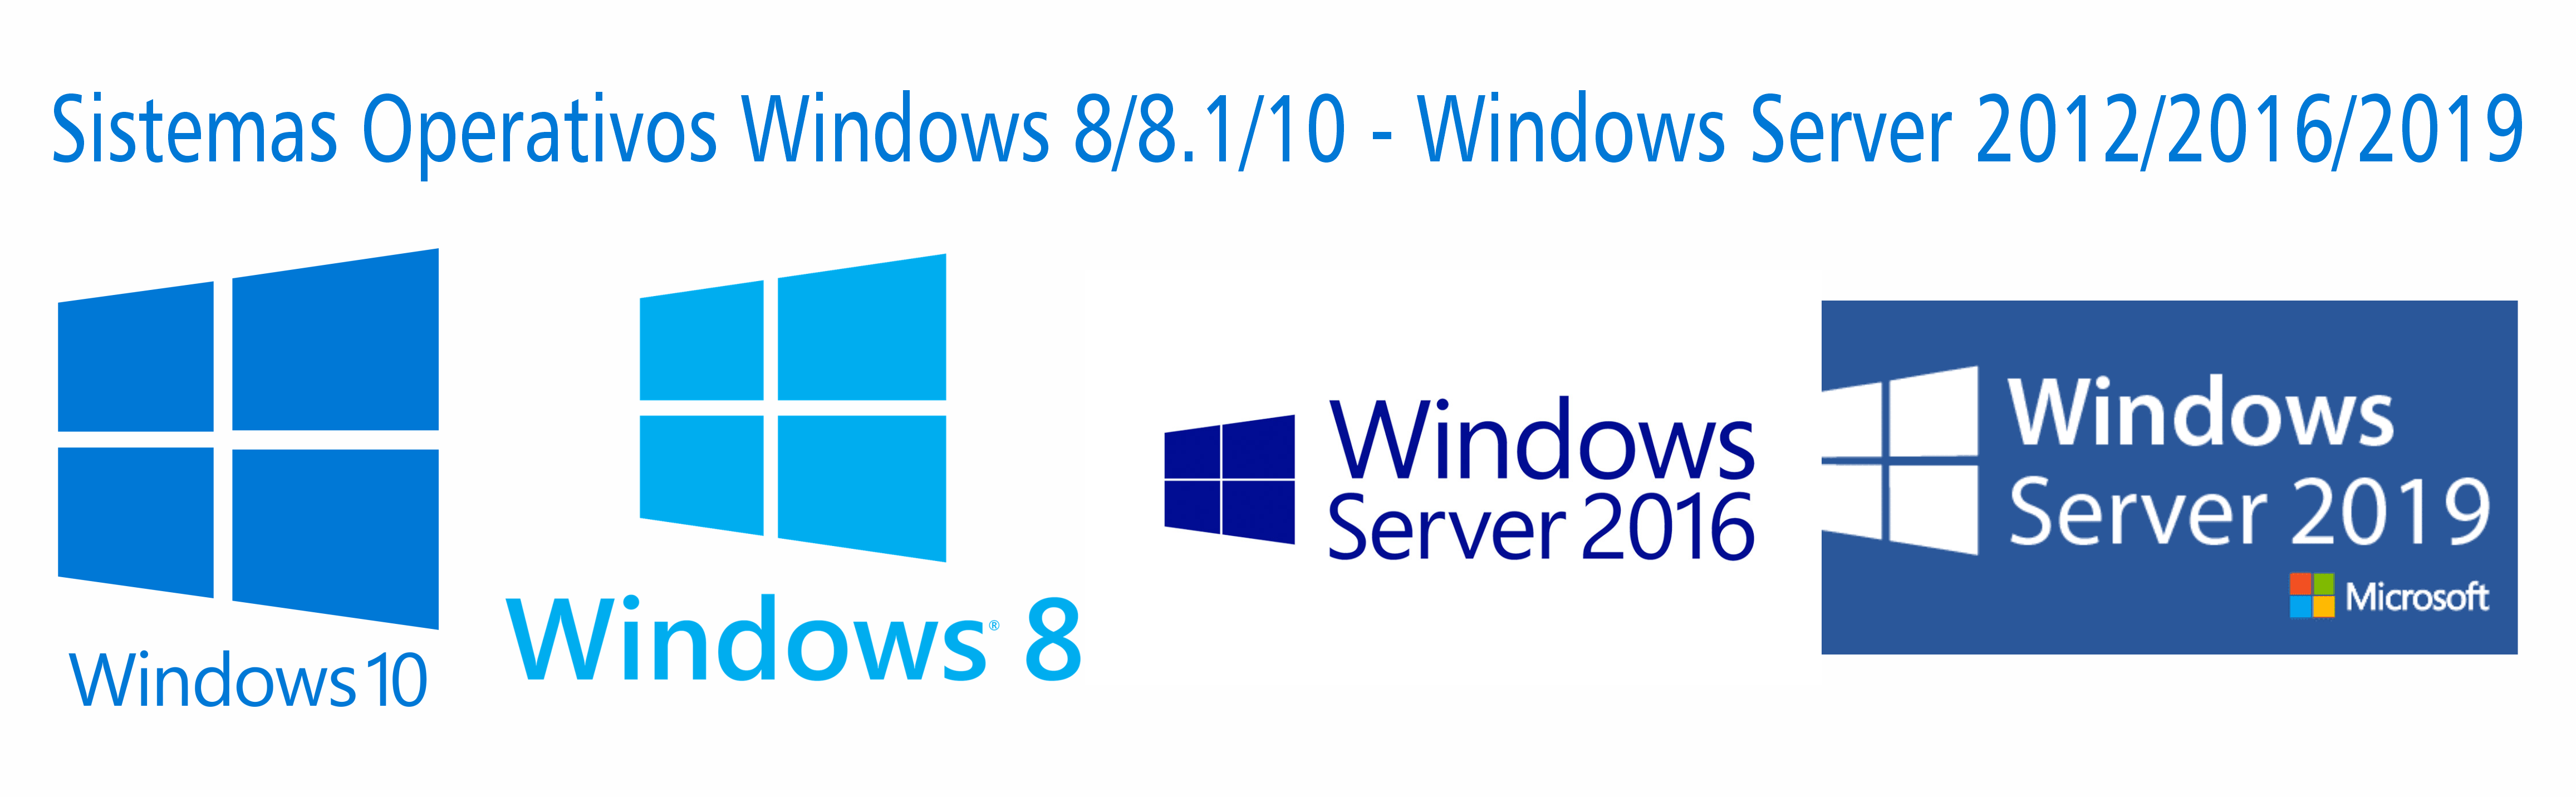 Licencias Windows 10 - Windows 11 - Windows Server